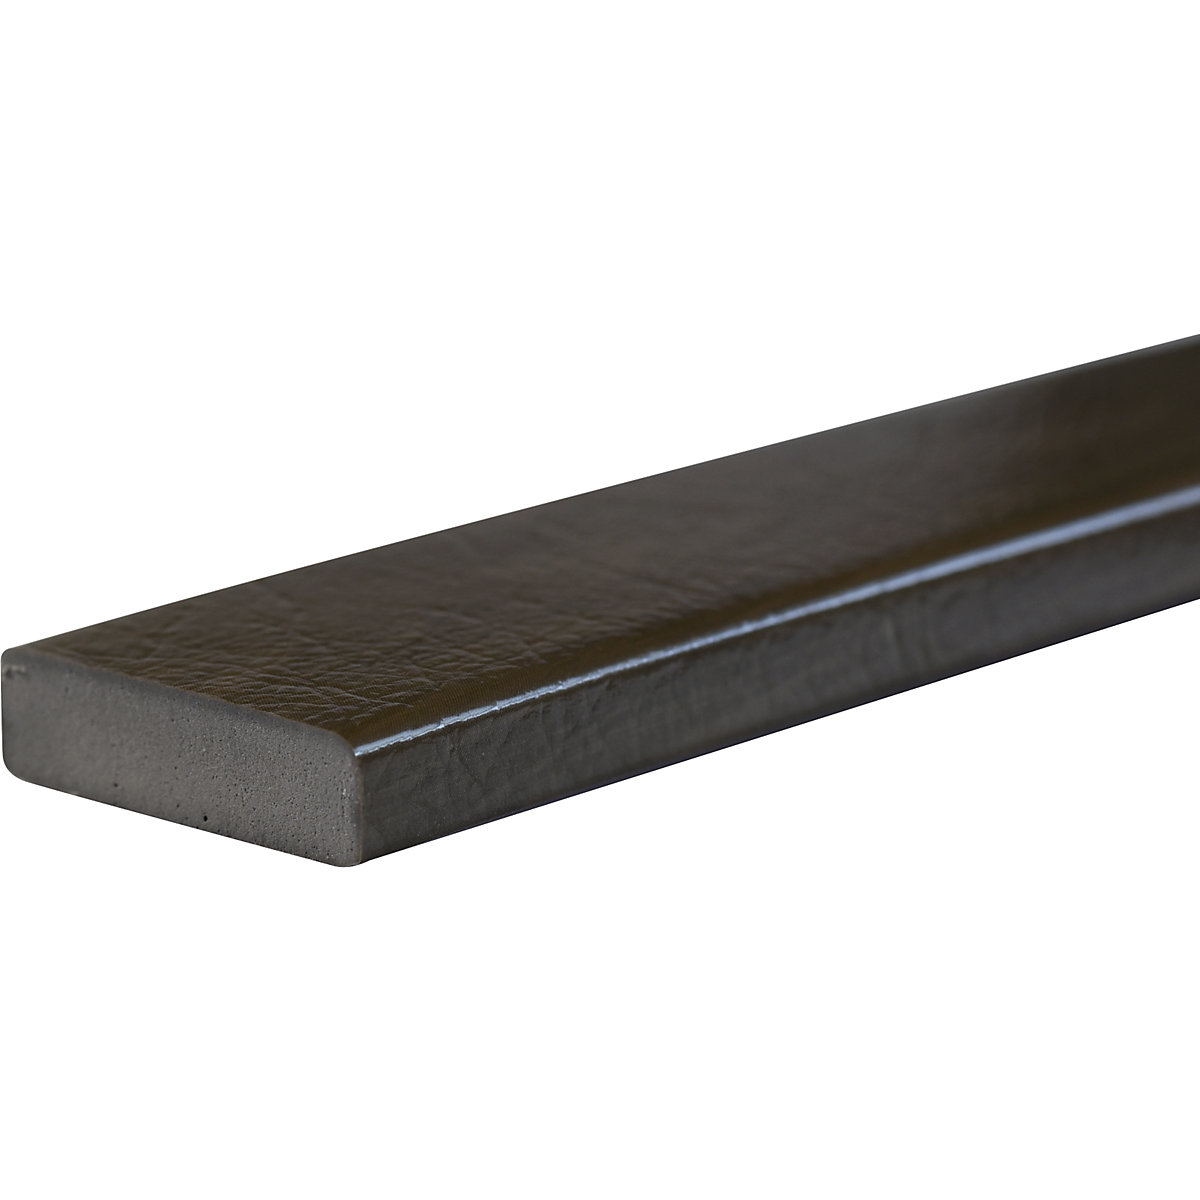 Knuffi®-oppervlaktebescherming – SHG, type S, stuk van 1 m, gecoat hout kaki-30